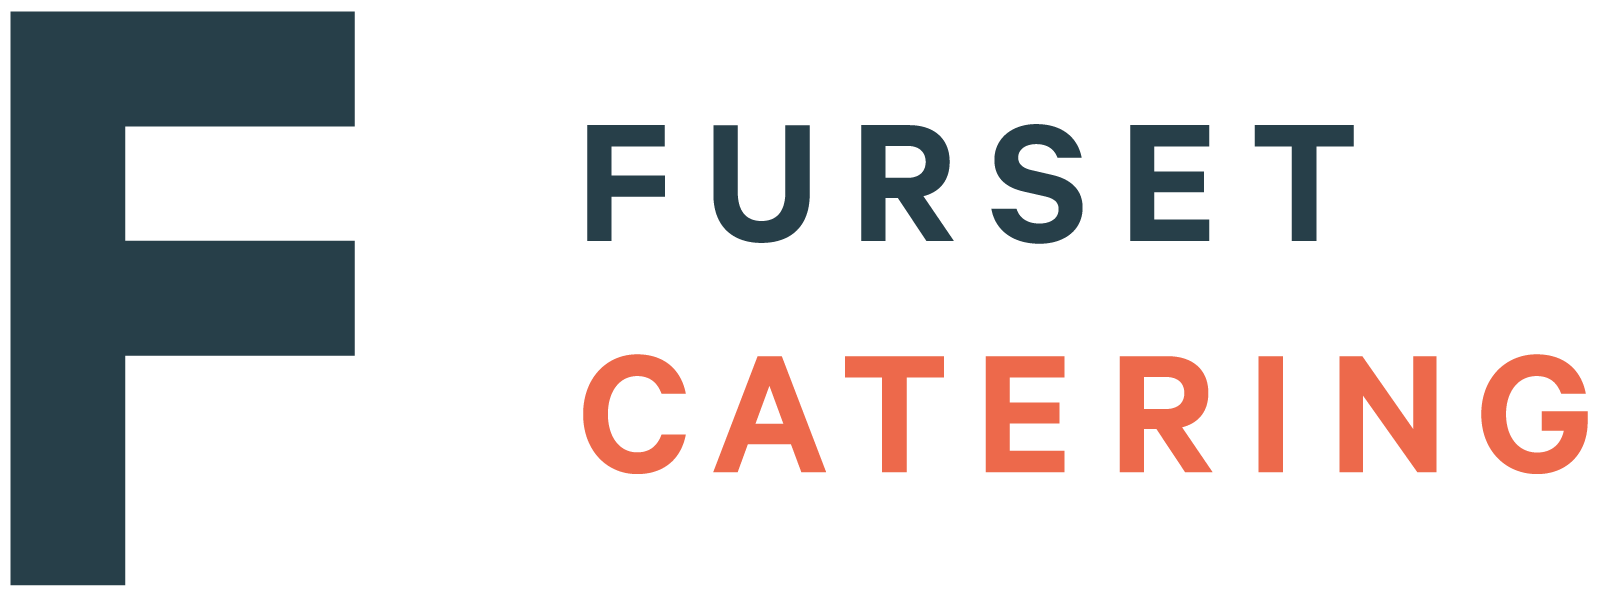 Furset Catering